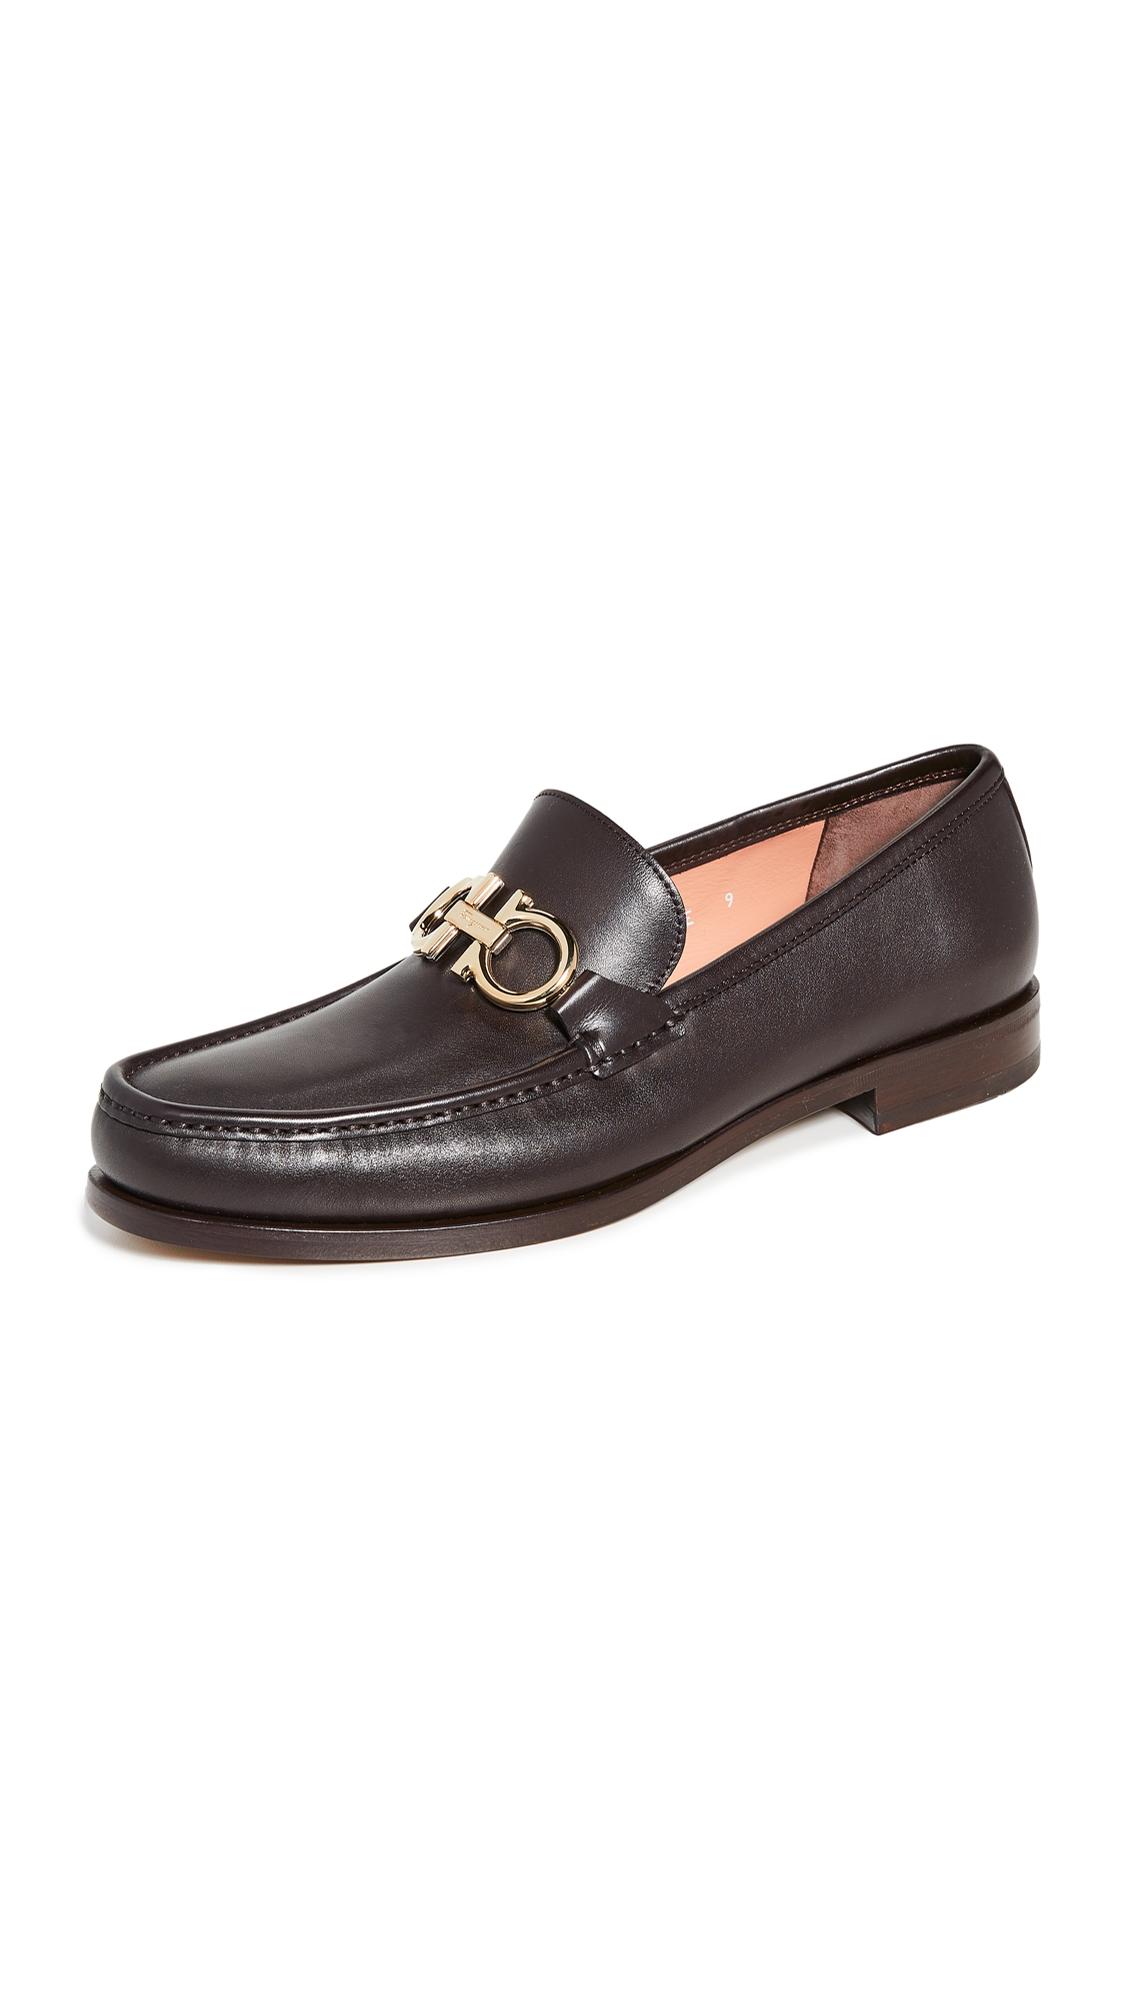 Ferragamo Leather Rolo Reversible Bit Loafers in Brown for Men - Lyst